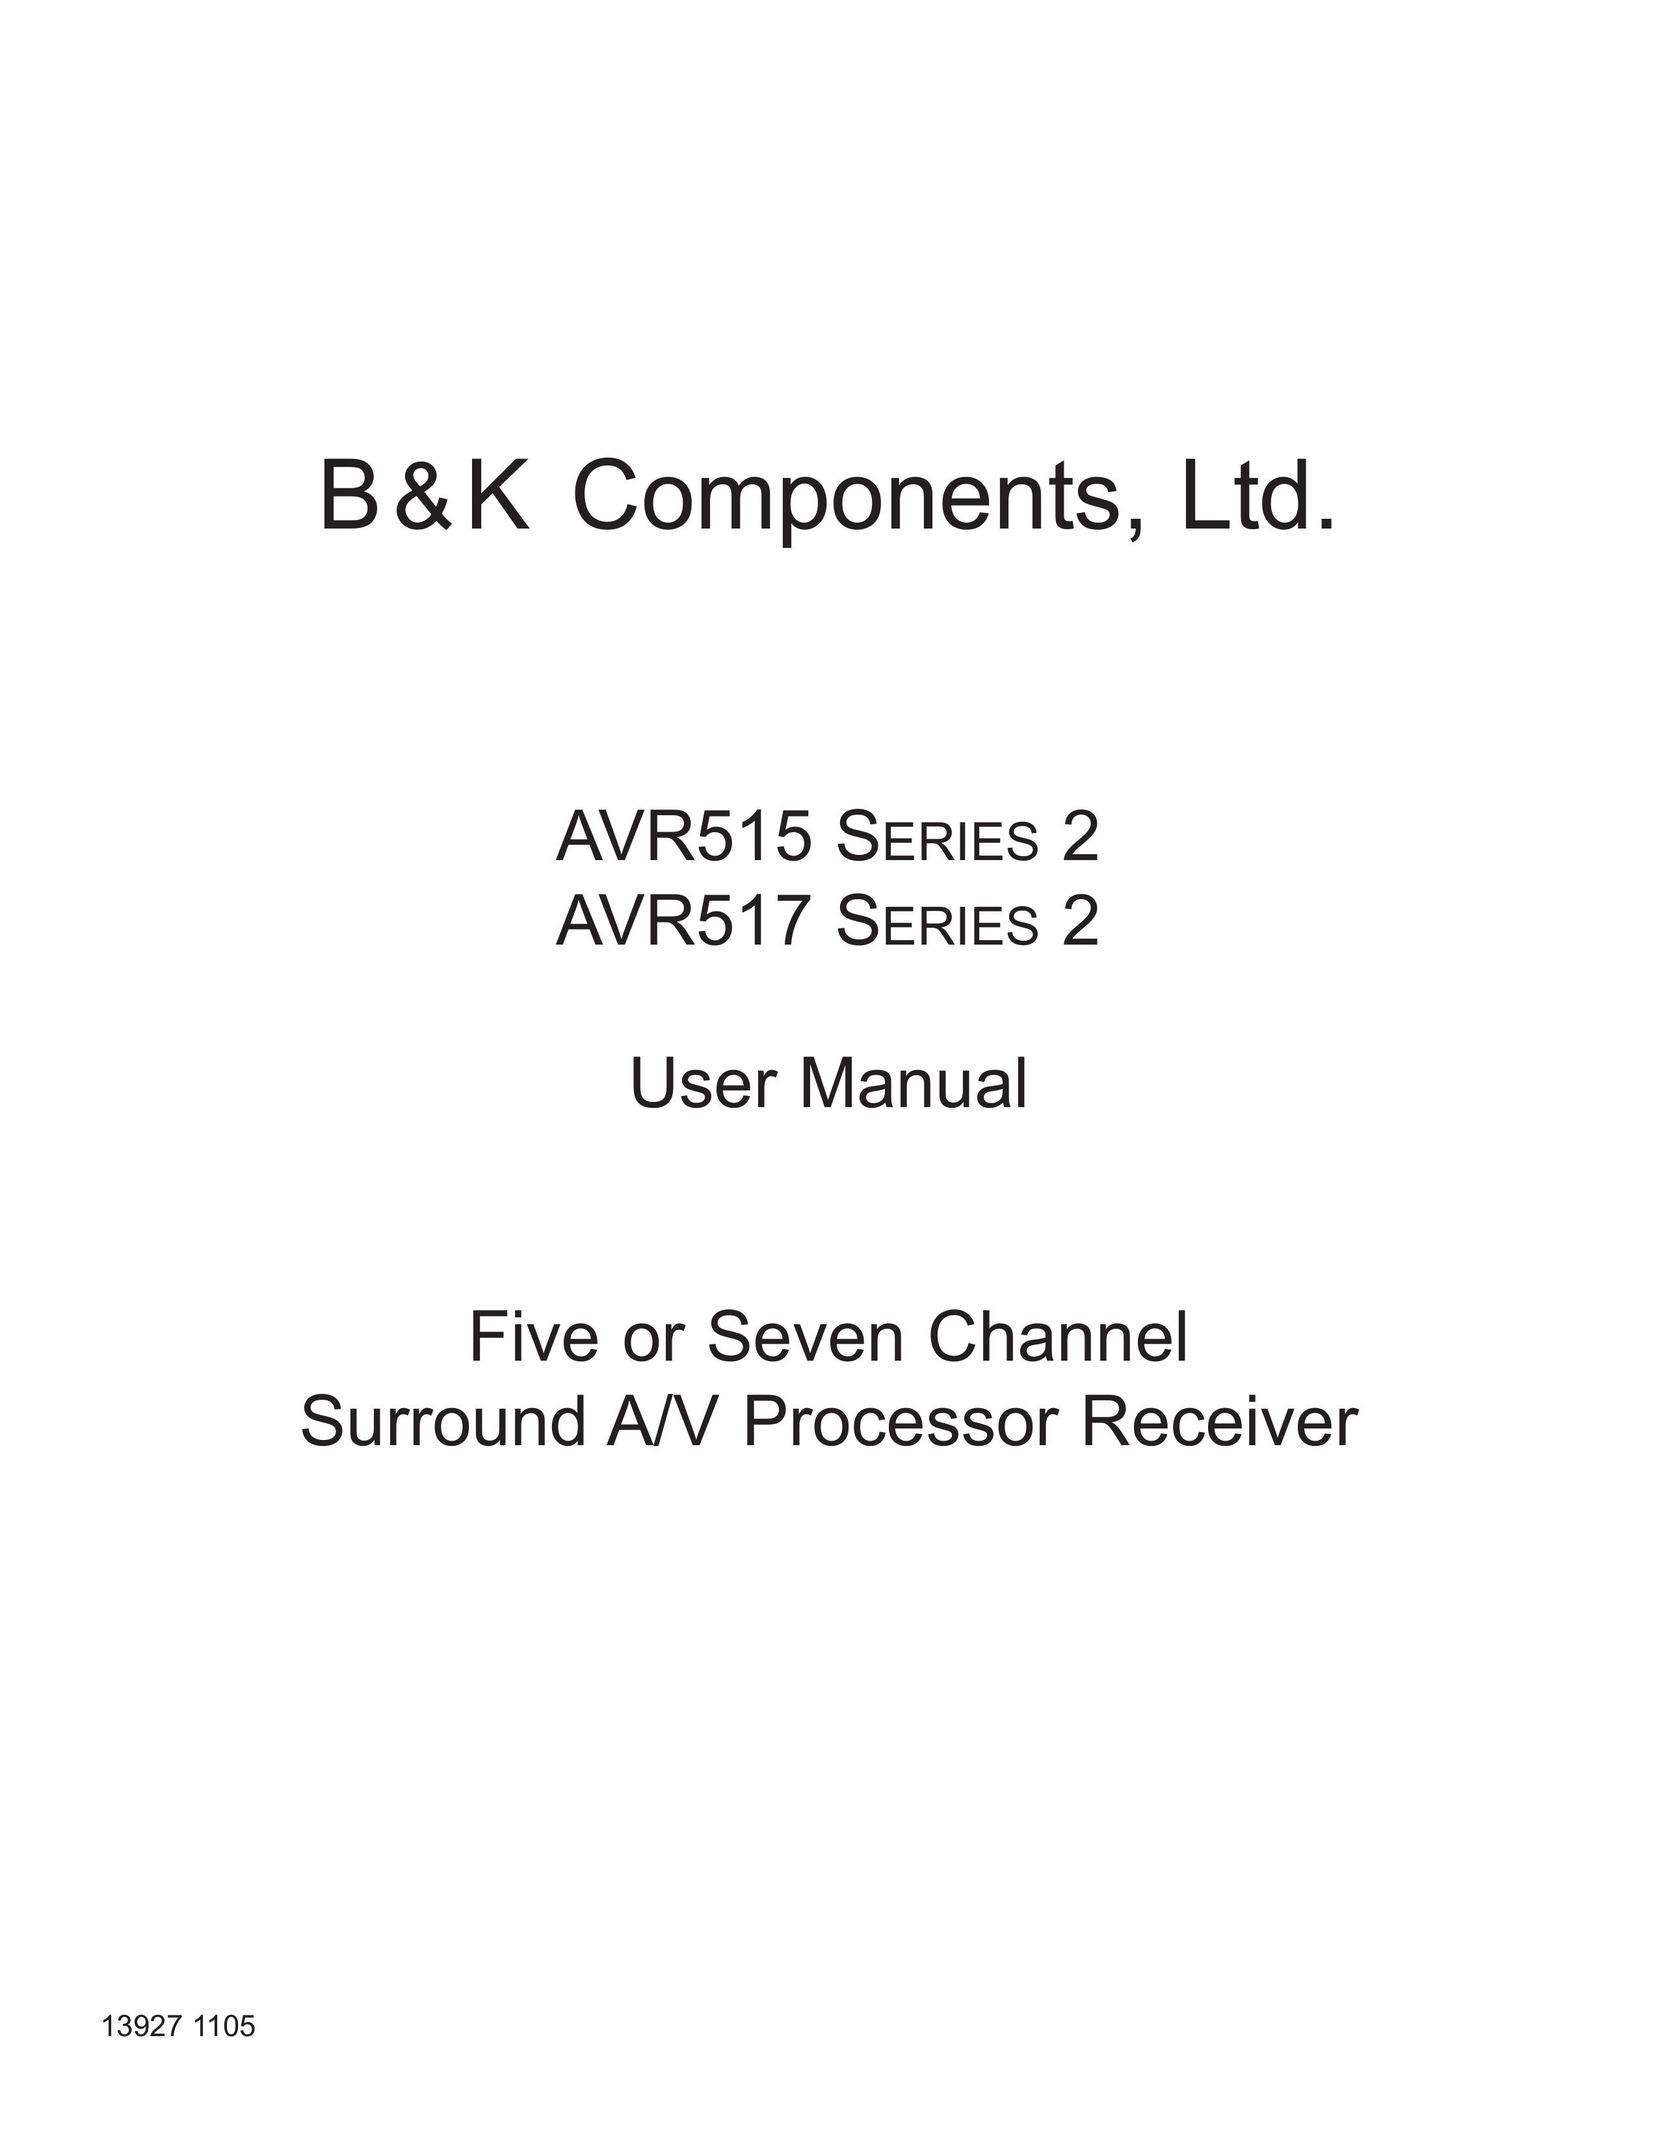 B&K AVR515 Stereo Receiver User Manual